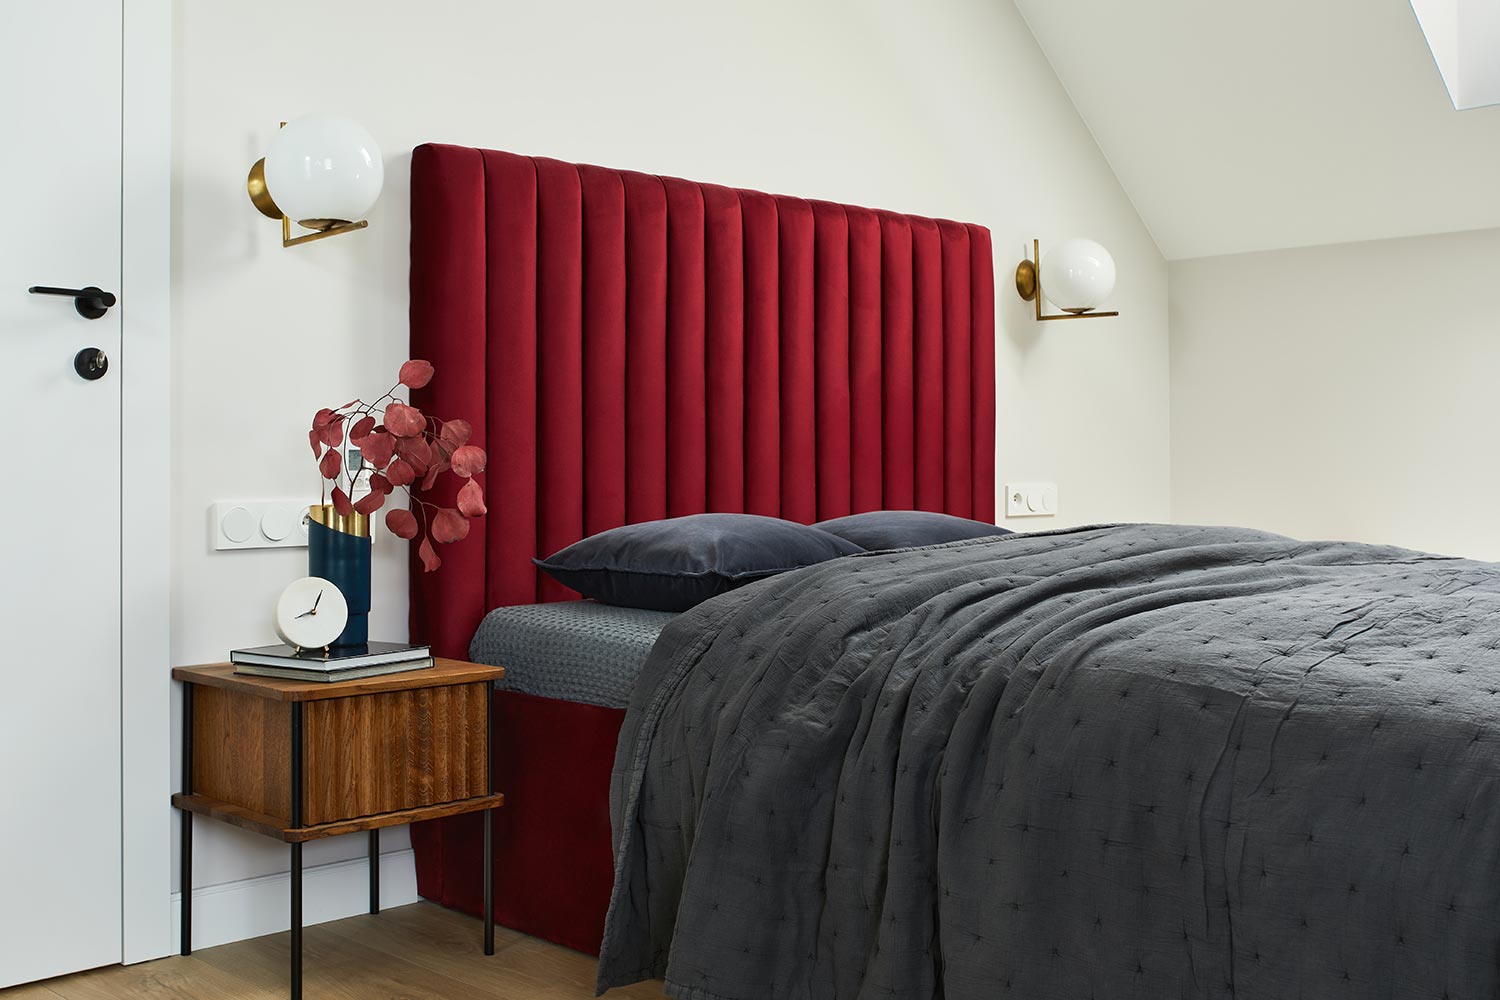 Minimalistic elegant bedroom interior with red bed